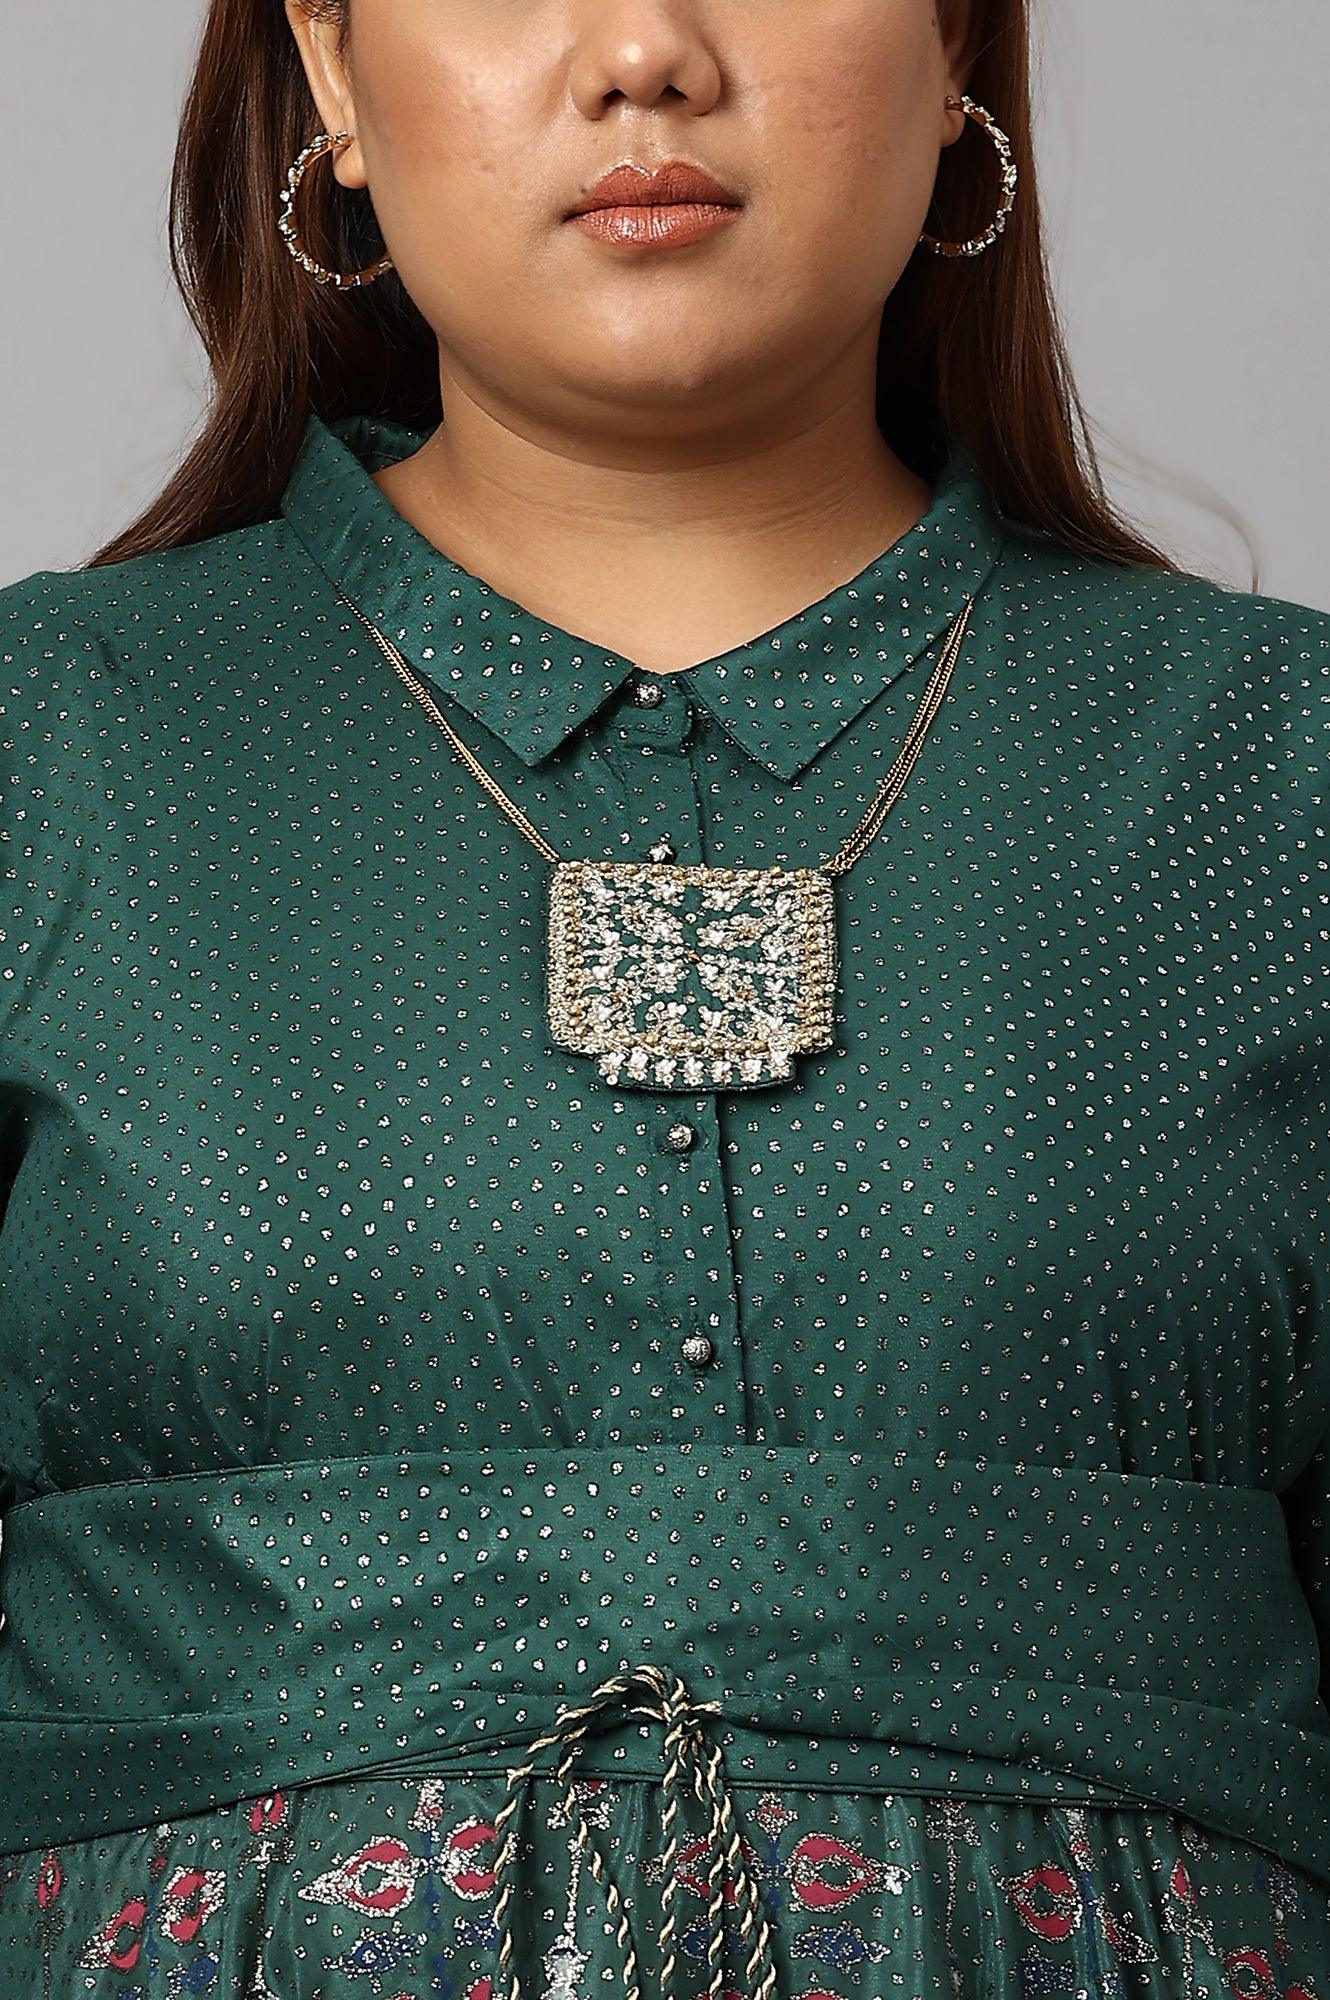 Green Glitter Printed Festive Plus Size Shirt Dress With Placket - wforwoman